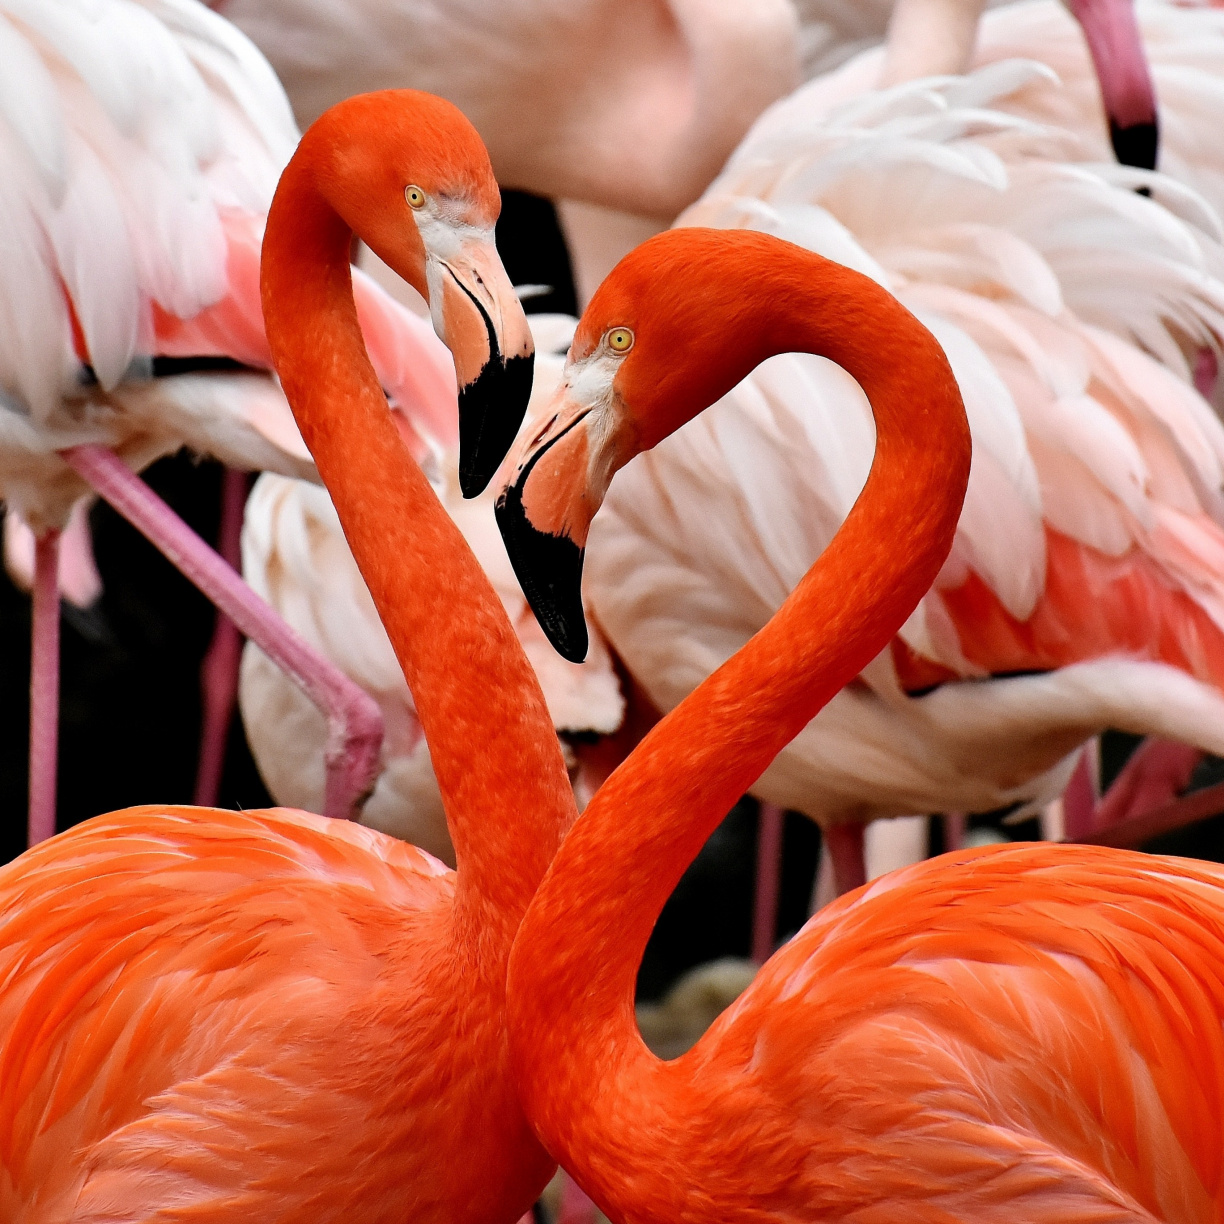 Flamingo, Birds, Wallpaper - Flamingo Hd Wallpapers 1080p ...